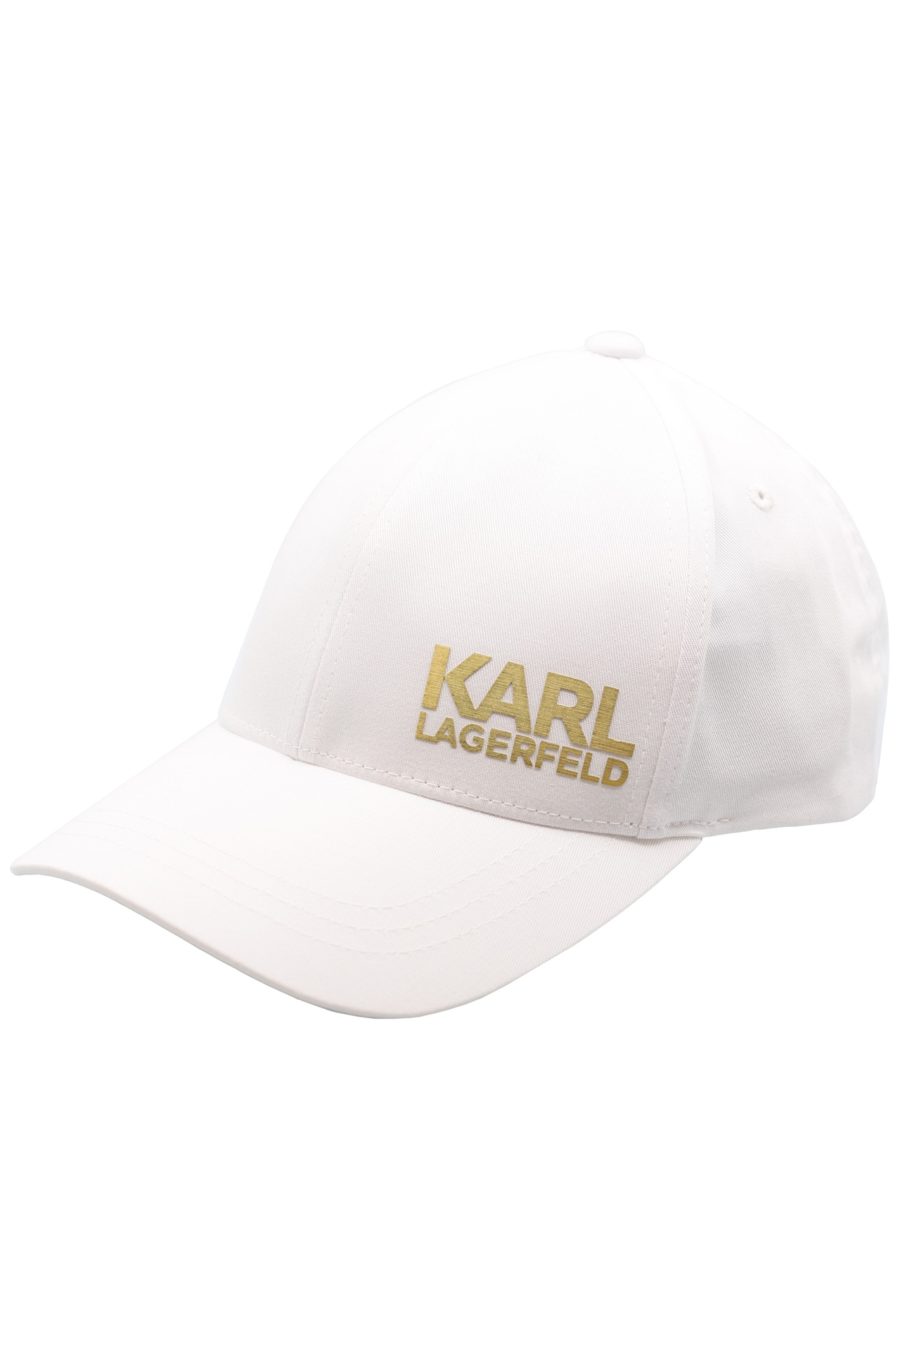 White cap with gold "Karl Legerfeld" logo - eae0c23135dbb793cd228dfcdd72b7c1e031bd19